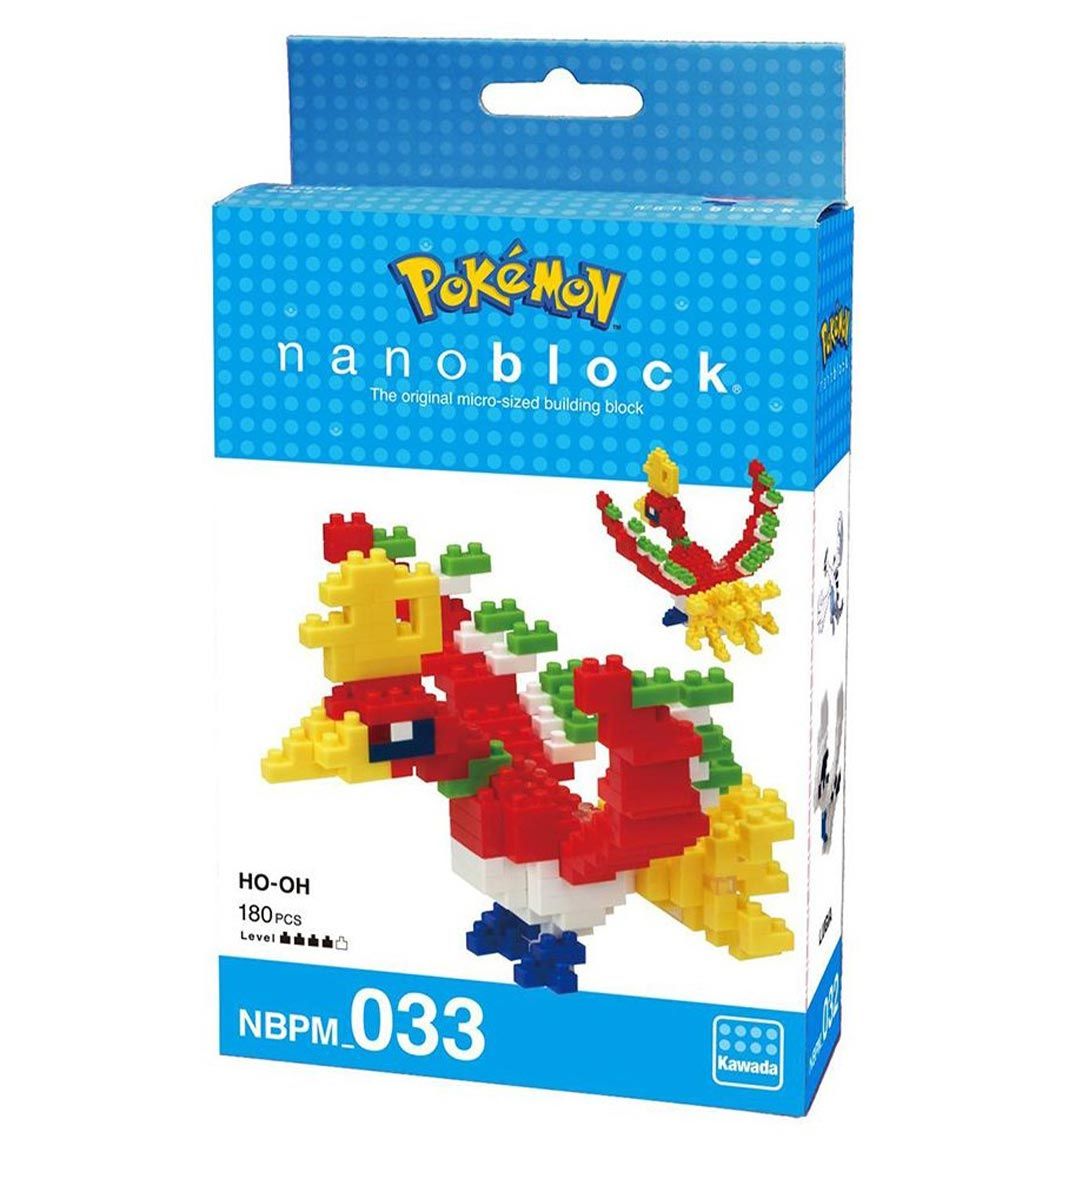 Pokémon x Nanoblock - Ho -OH - NBPM 033